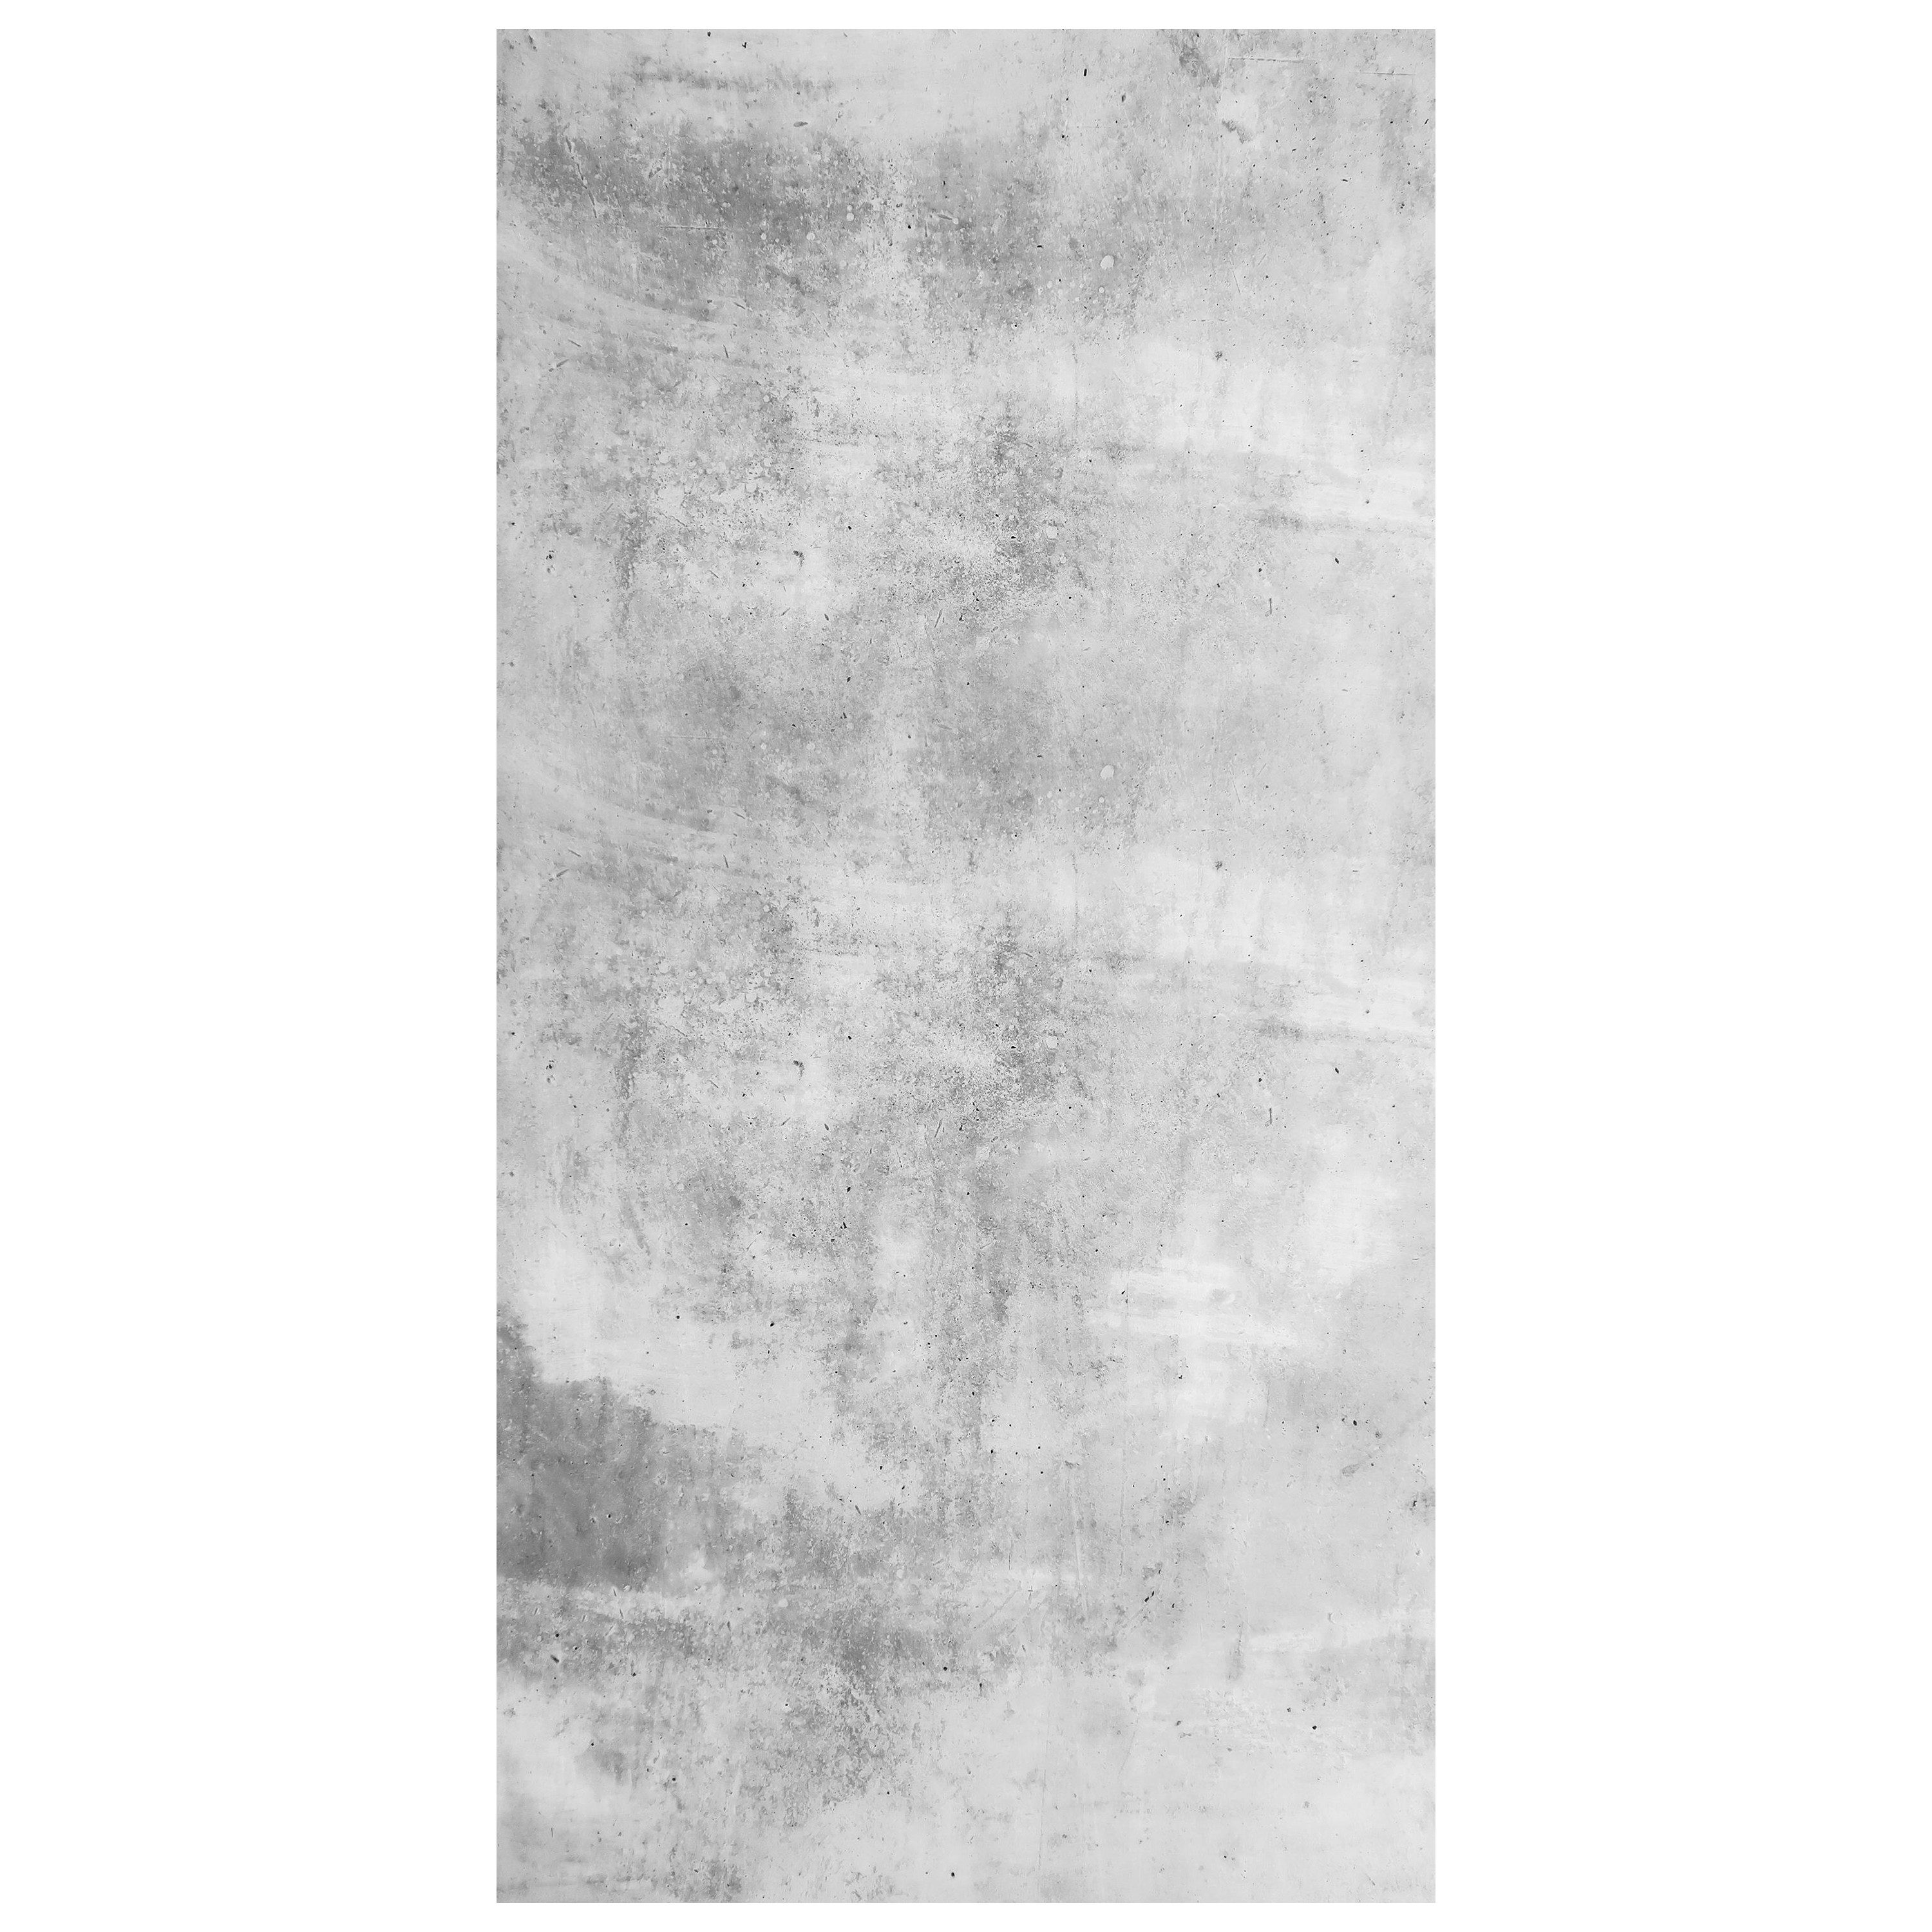 wandmotiv24 Türtapete helle Betonwand, Weiß, Grau, glatt, Fototapete, Wandtapete, Motivtapete, matt, selbstklebende Dekorfolie